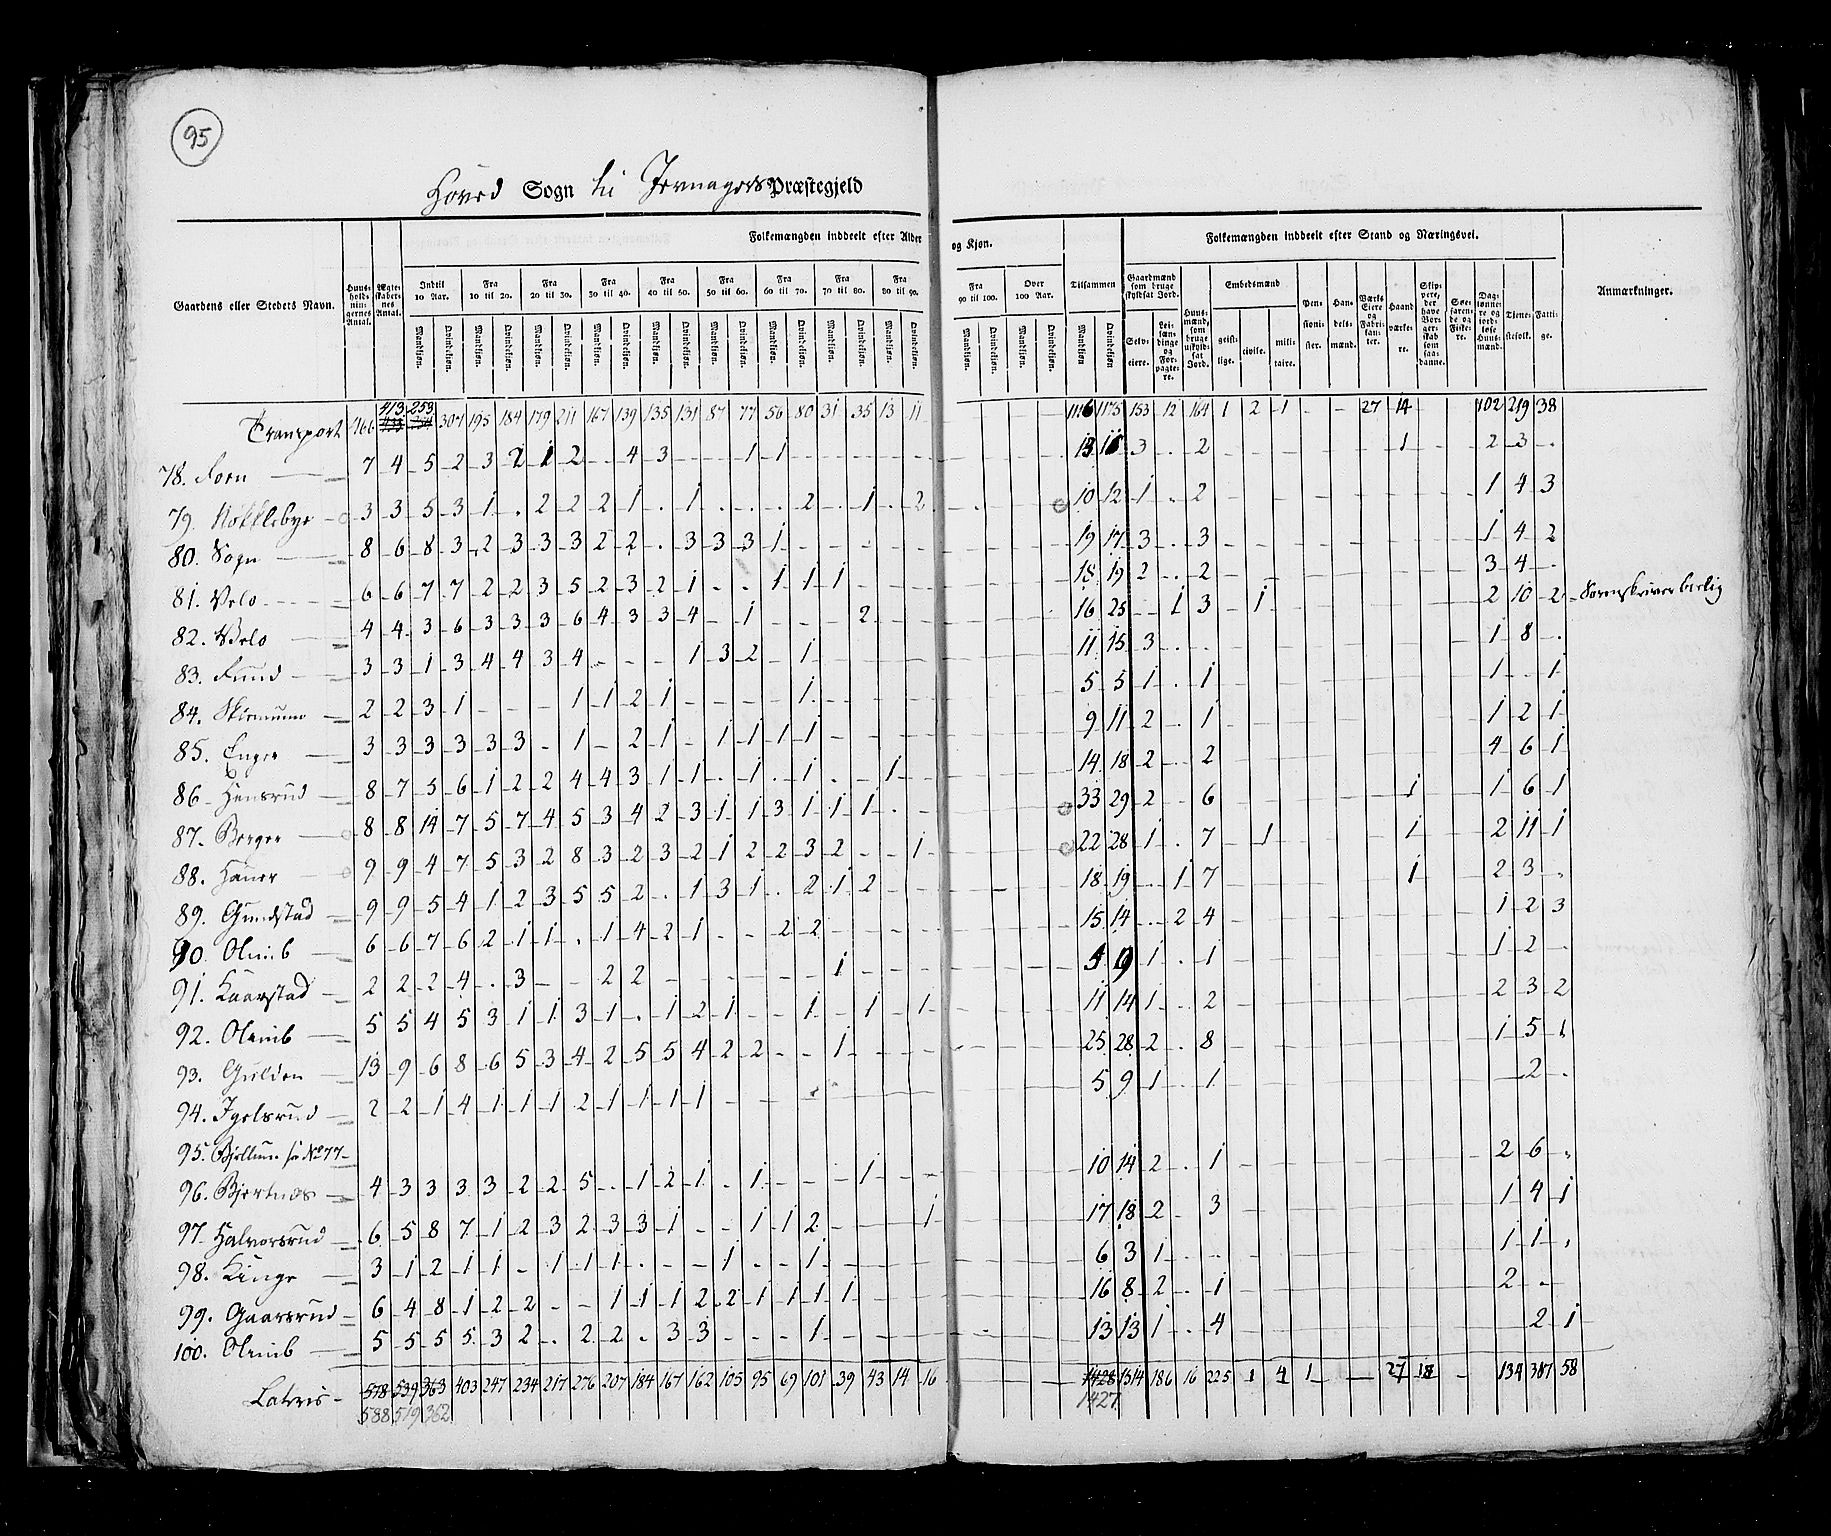 RA, Census 1825, vol. 6: Kristians amt, 1825, p. 95